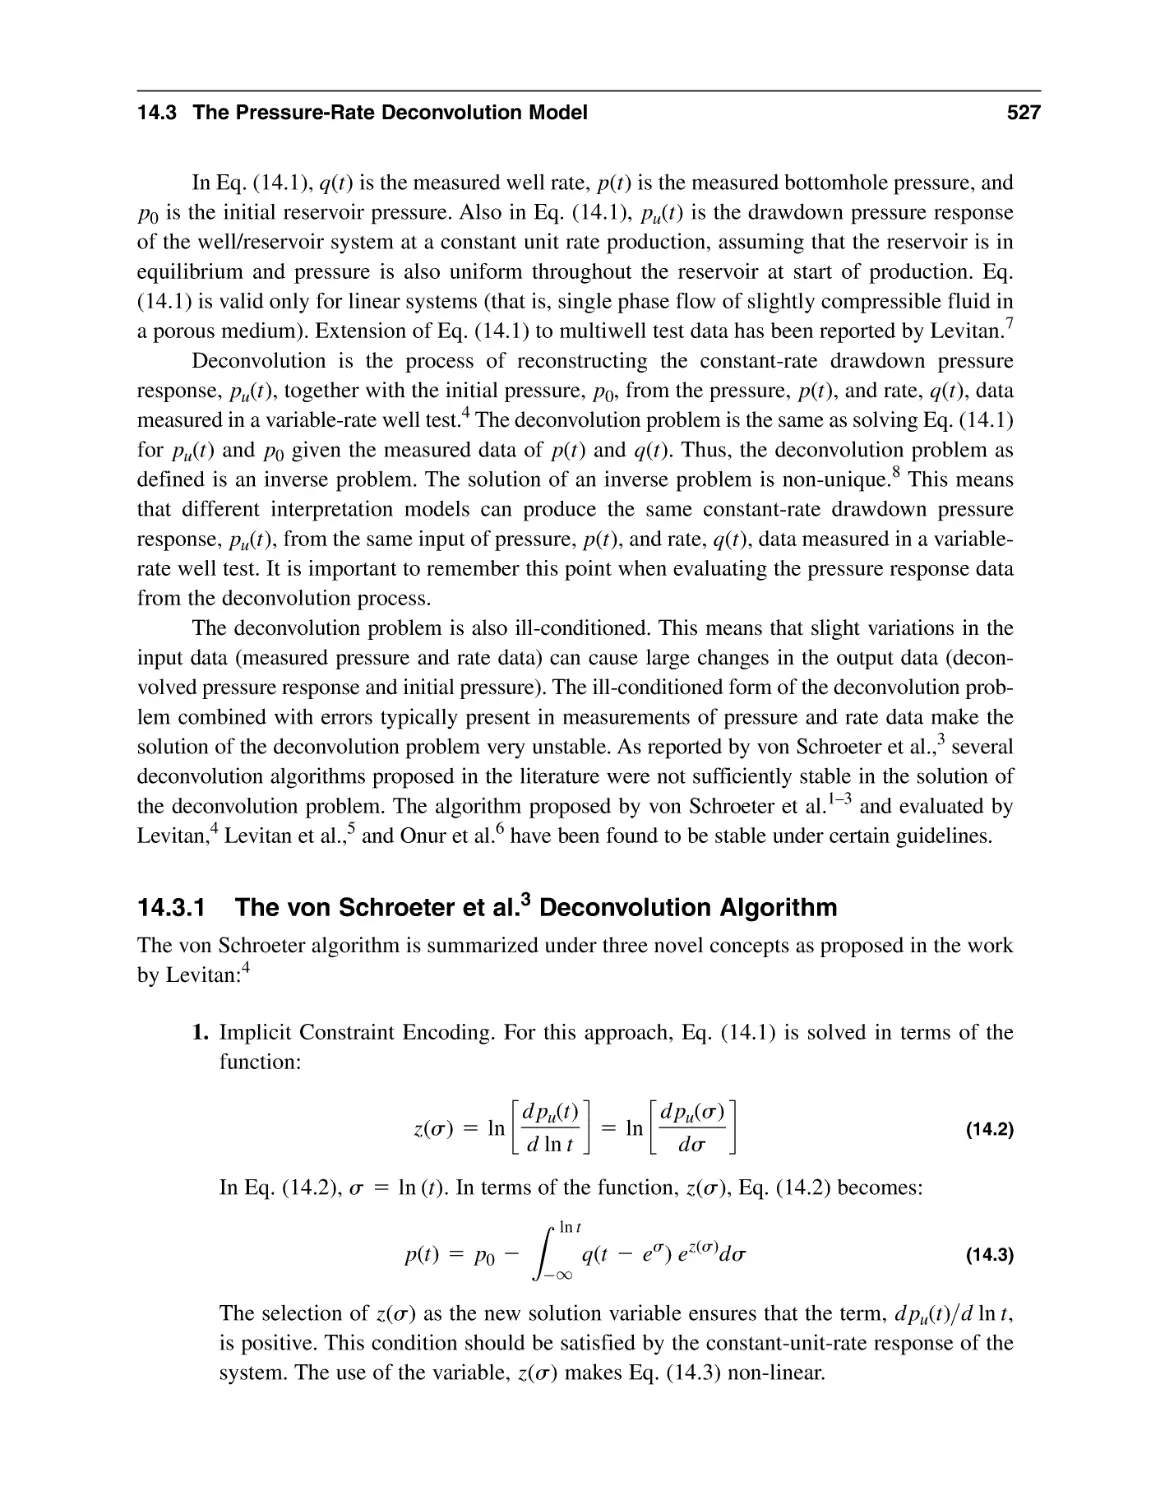 14.3.1 The von Schroeter et al. Deconvolution Algorithm